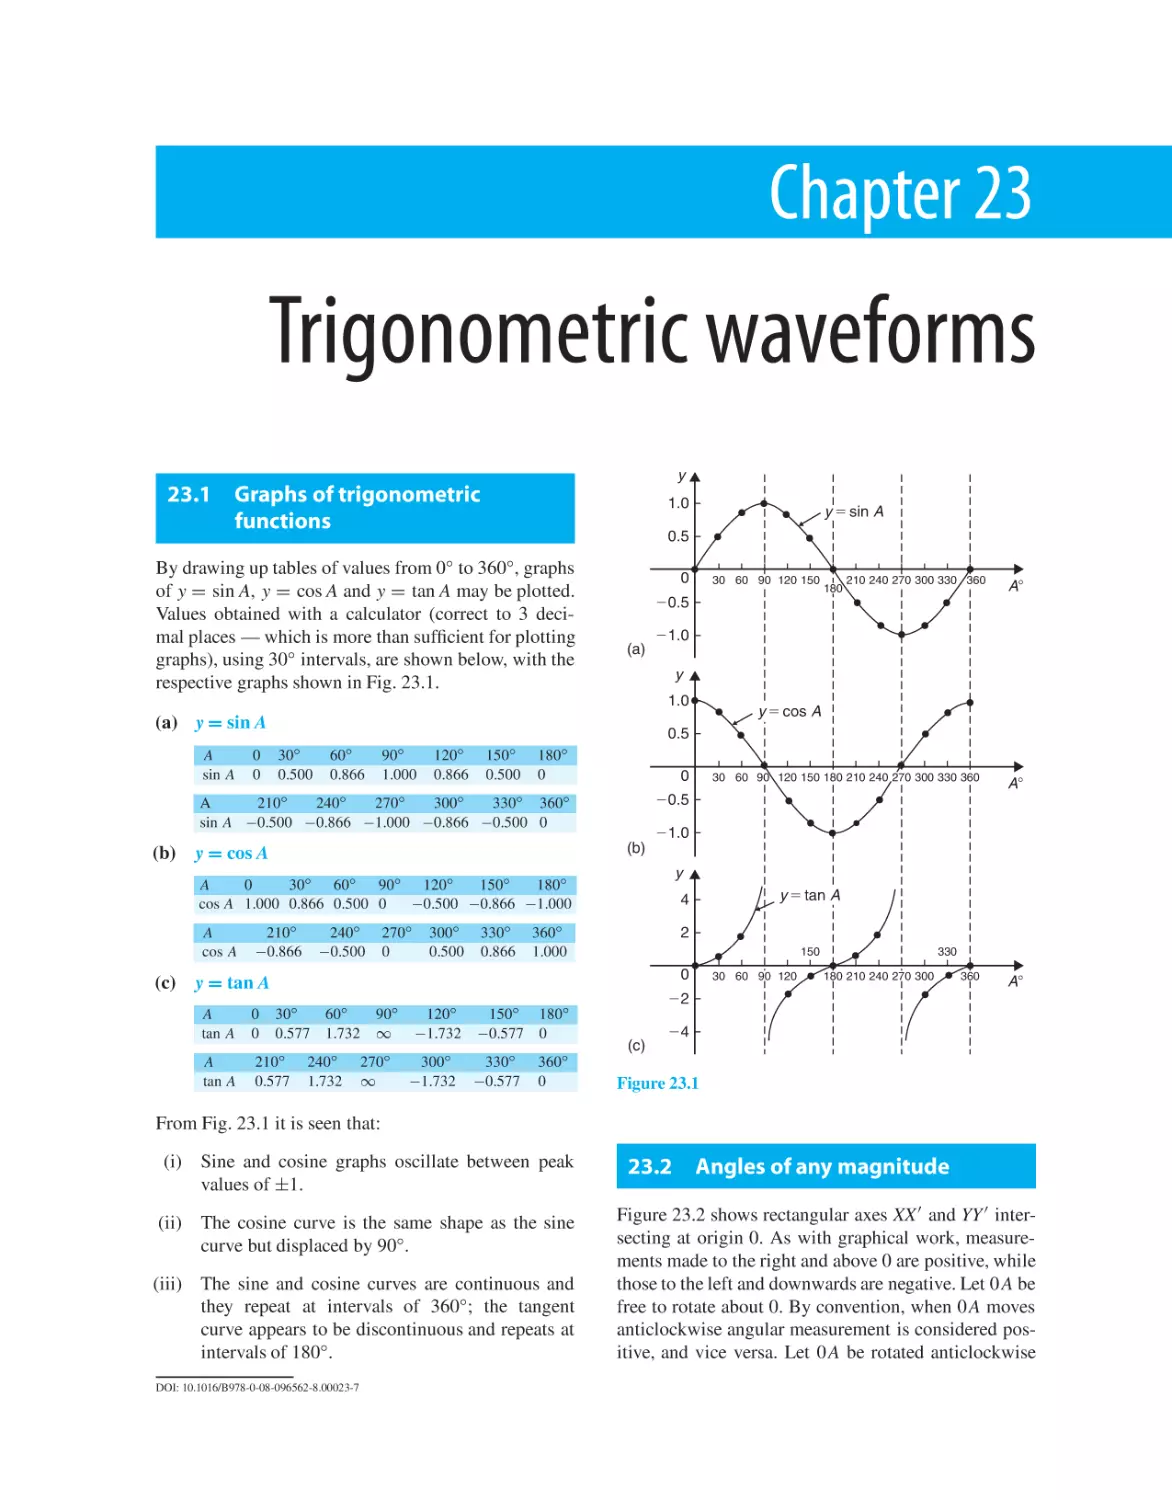 Chapter 23. Trigonometric waveforms
23.1 Graphs of trigonometric functions
23.2 Angles of any magnitude